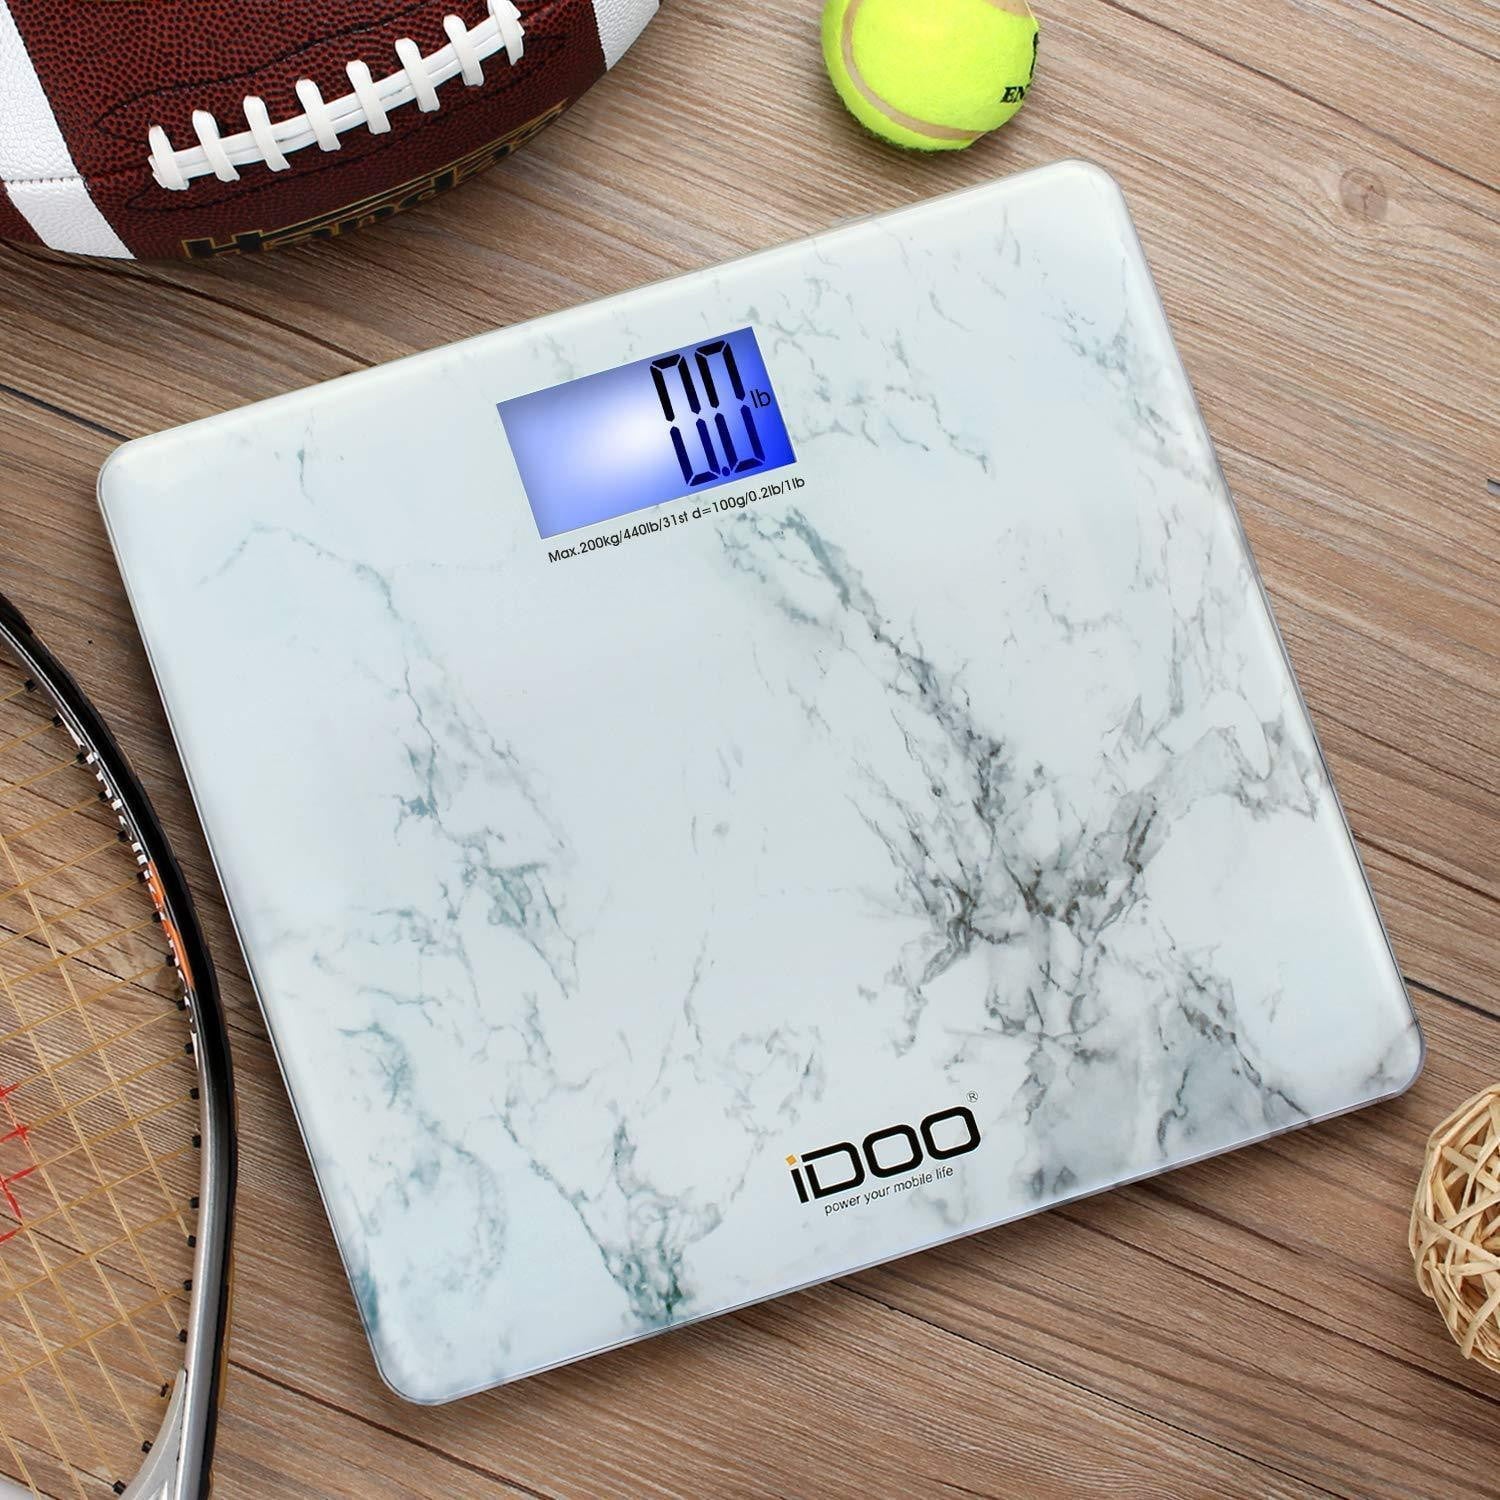 iDOO BG540 Digital Body Weight Bathroom Scale - _wf_cus Body Weight Scales Health Monitors Scale by iDOO